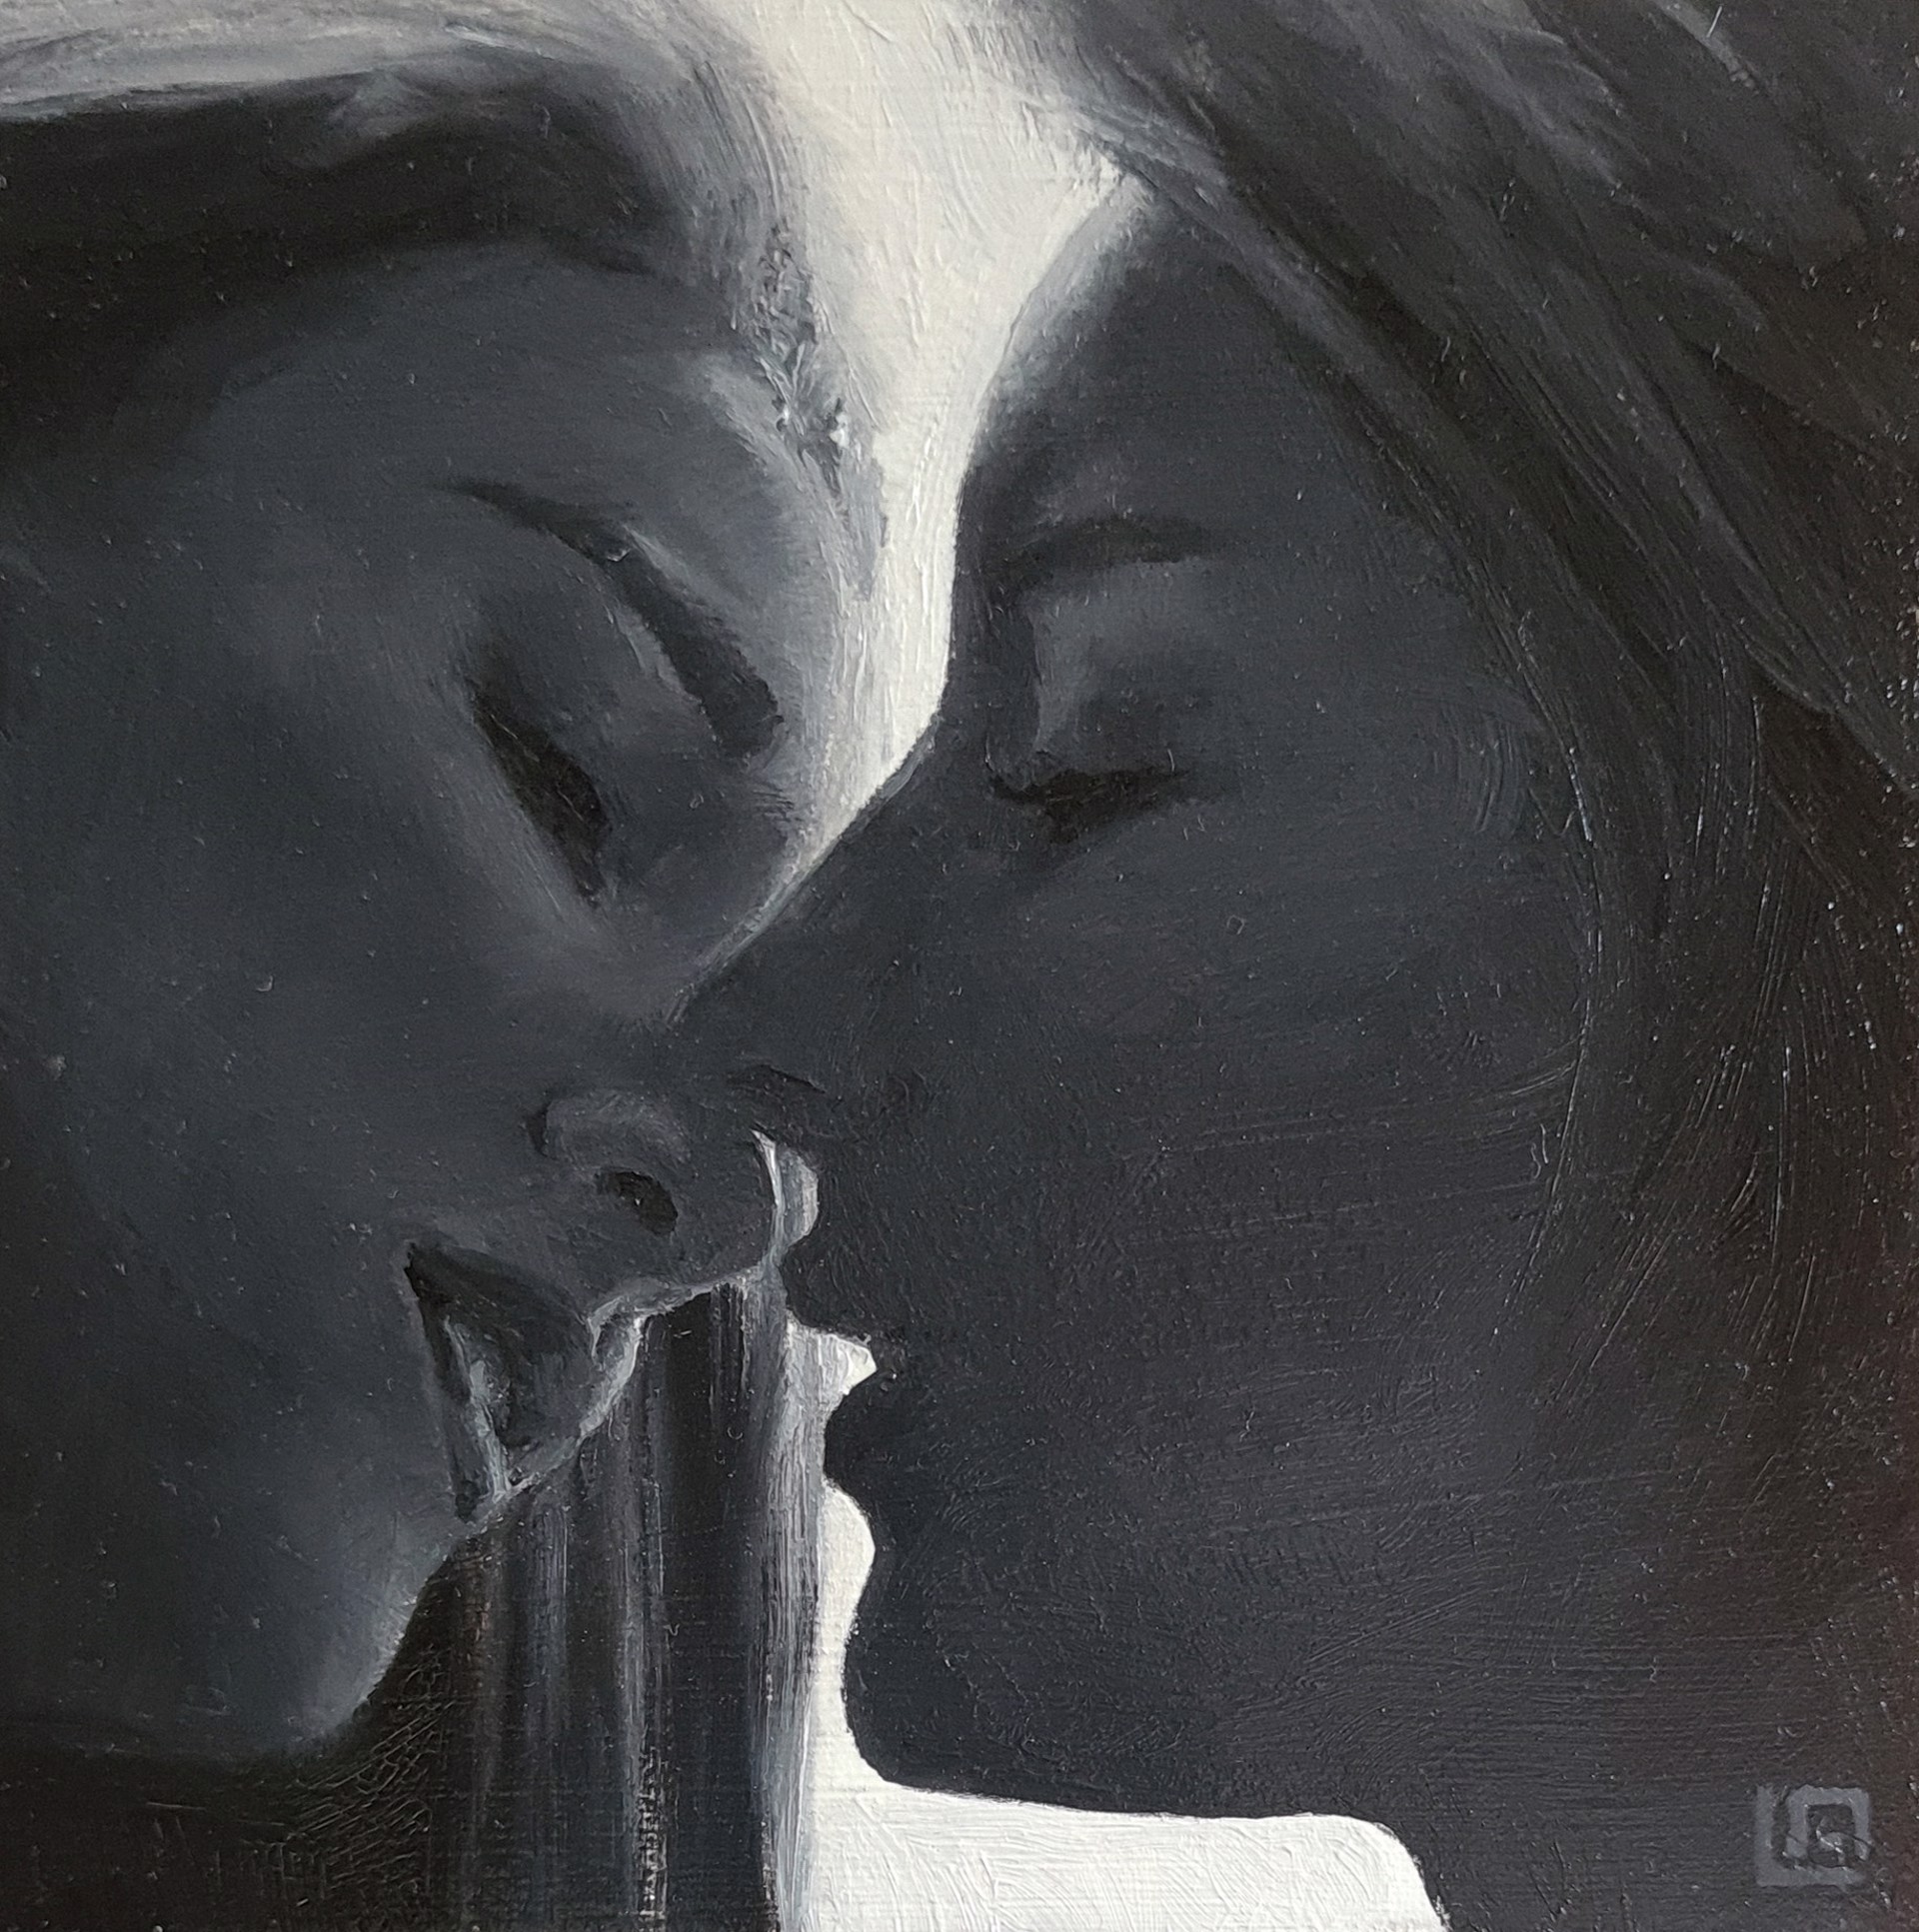 The Kiss #7 by Linda Delahaye